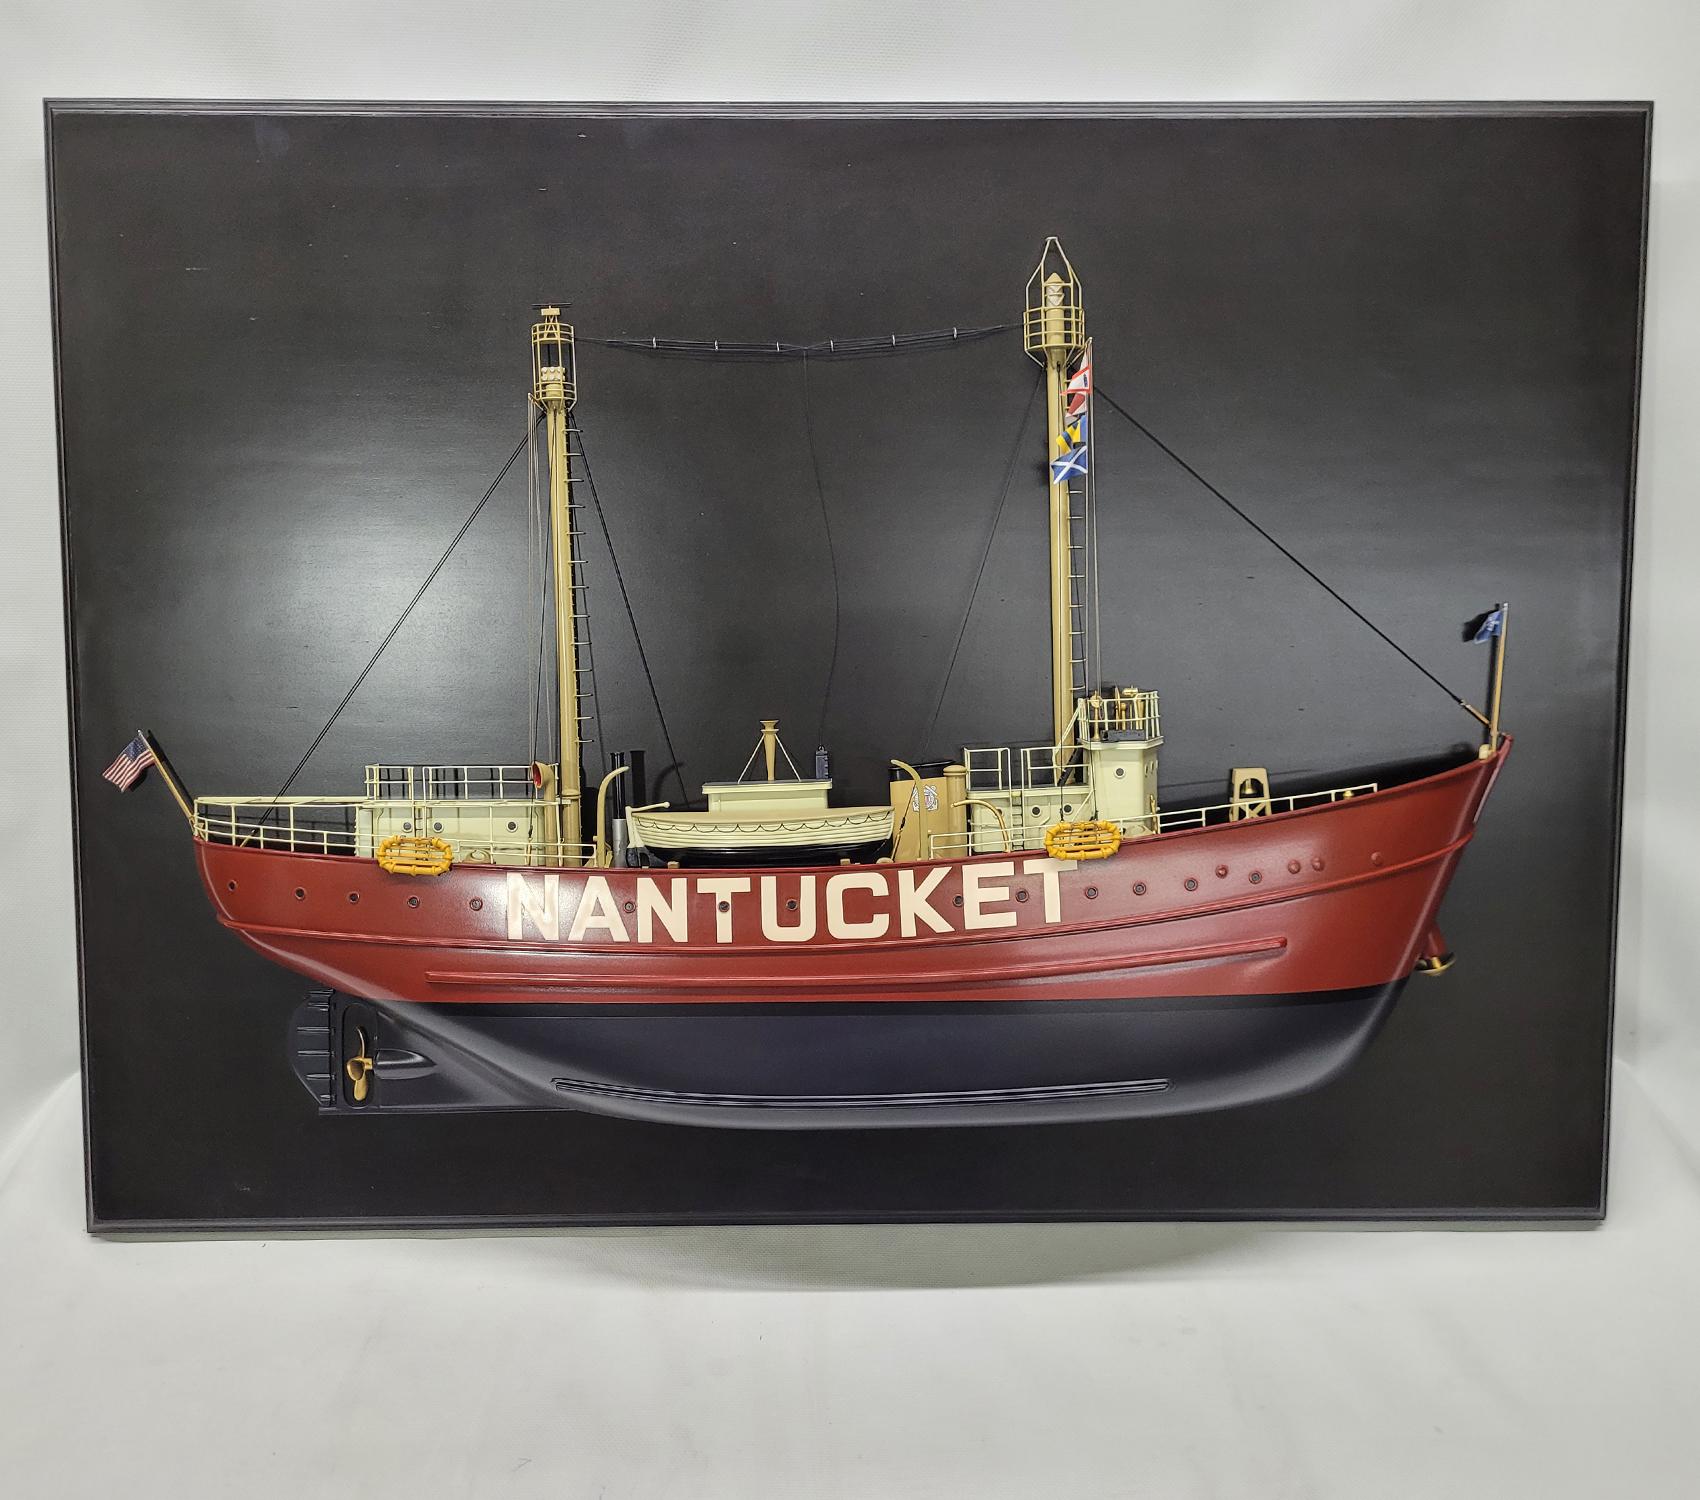 A display model of the Nantucket Lightship